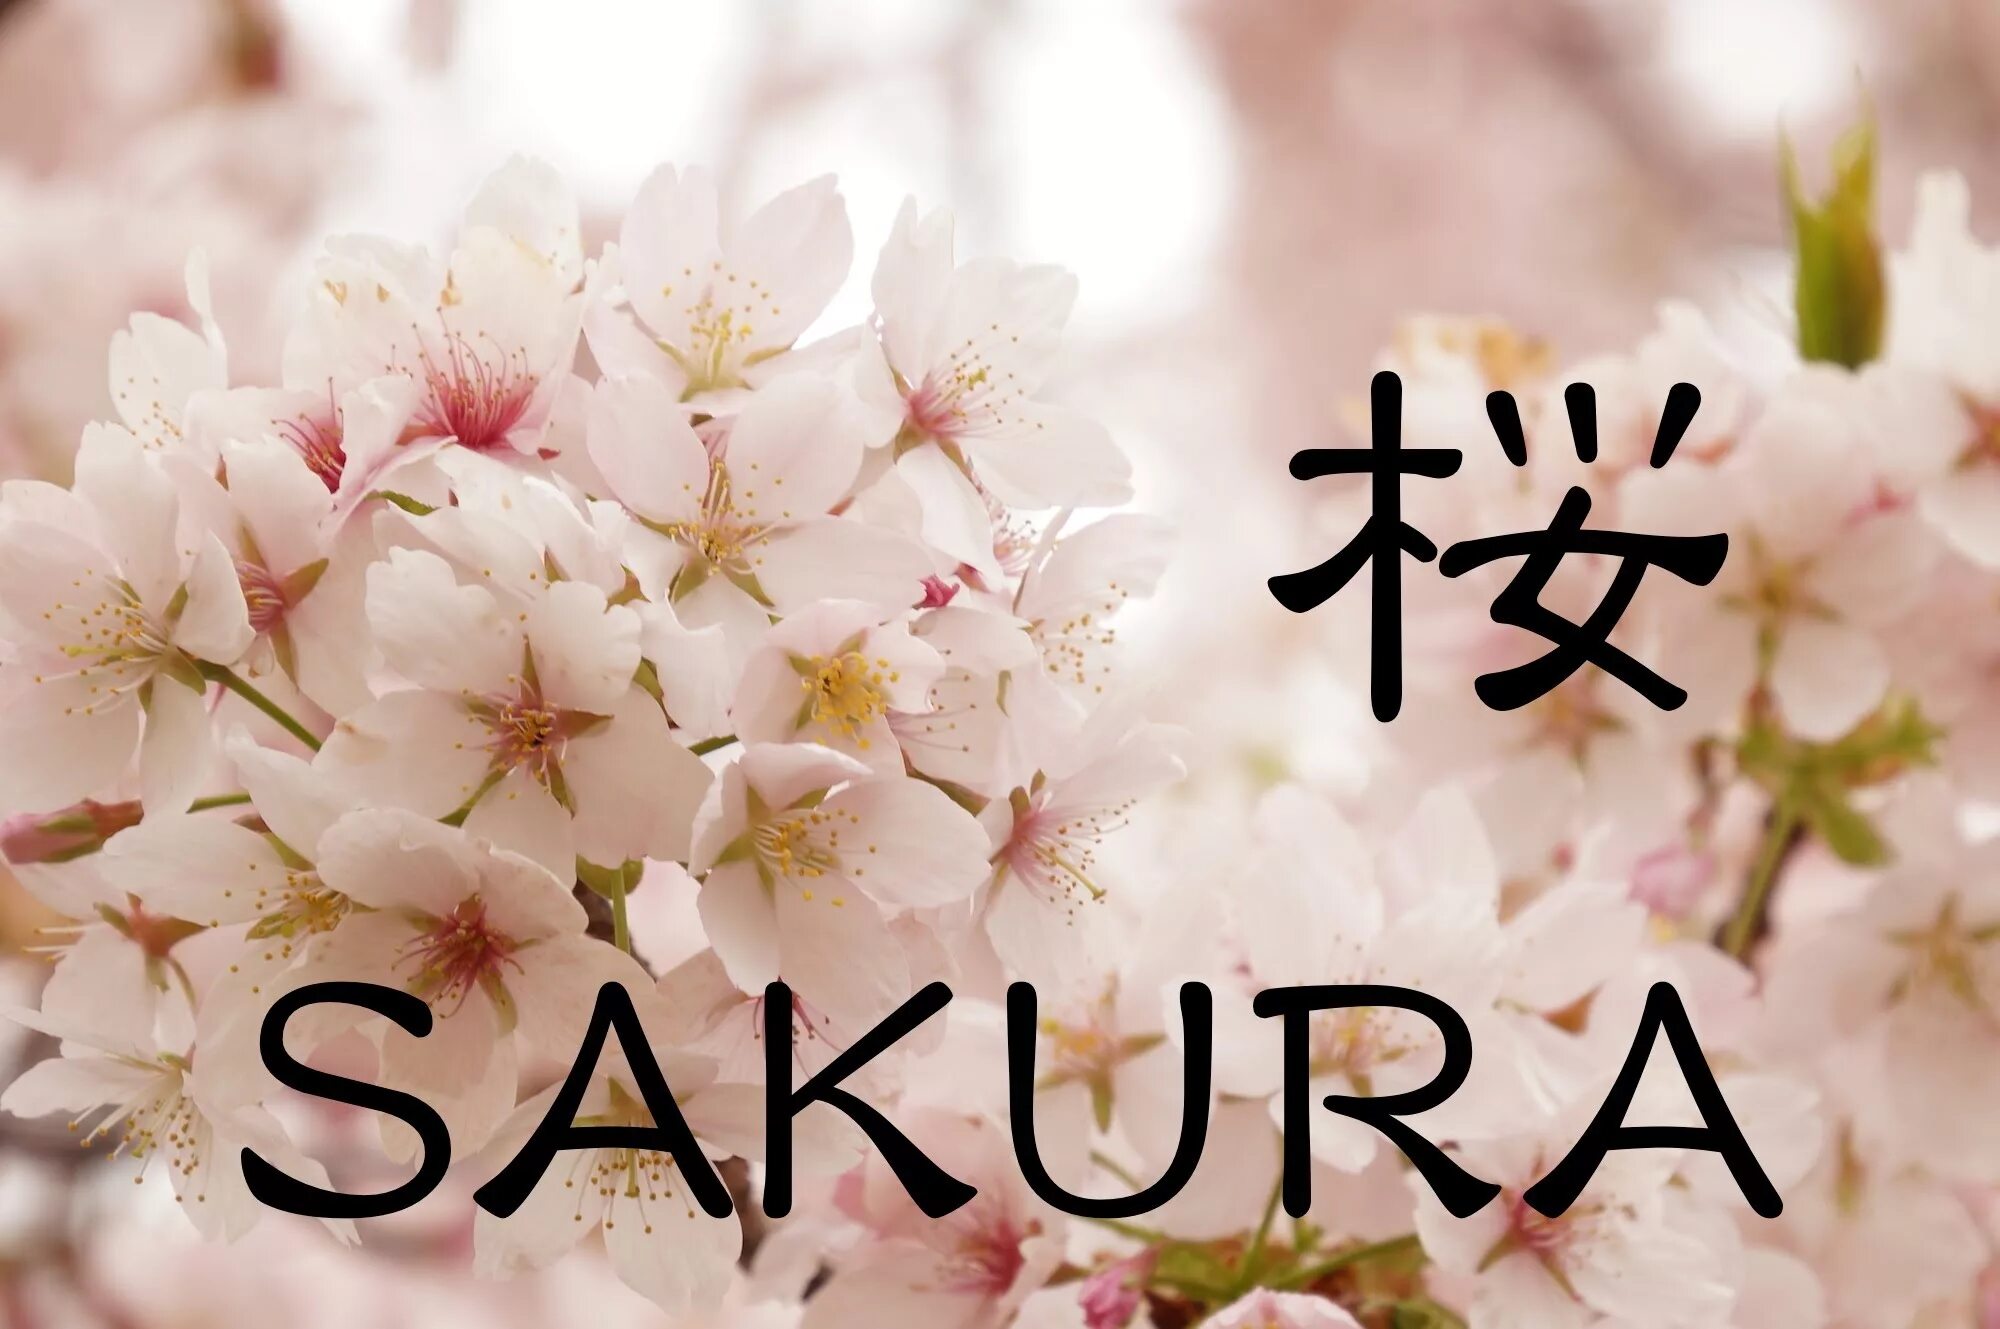 Сакура перевод. Сакура надпись. Сакура имя. Японская Сакура. Иероглиф Сакура.